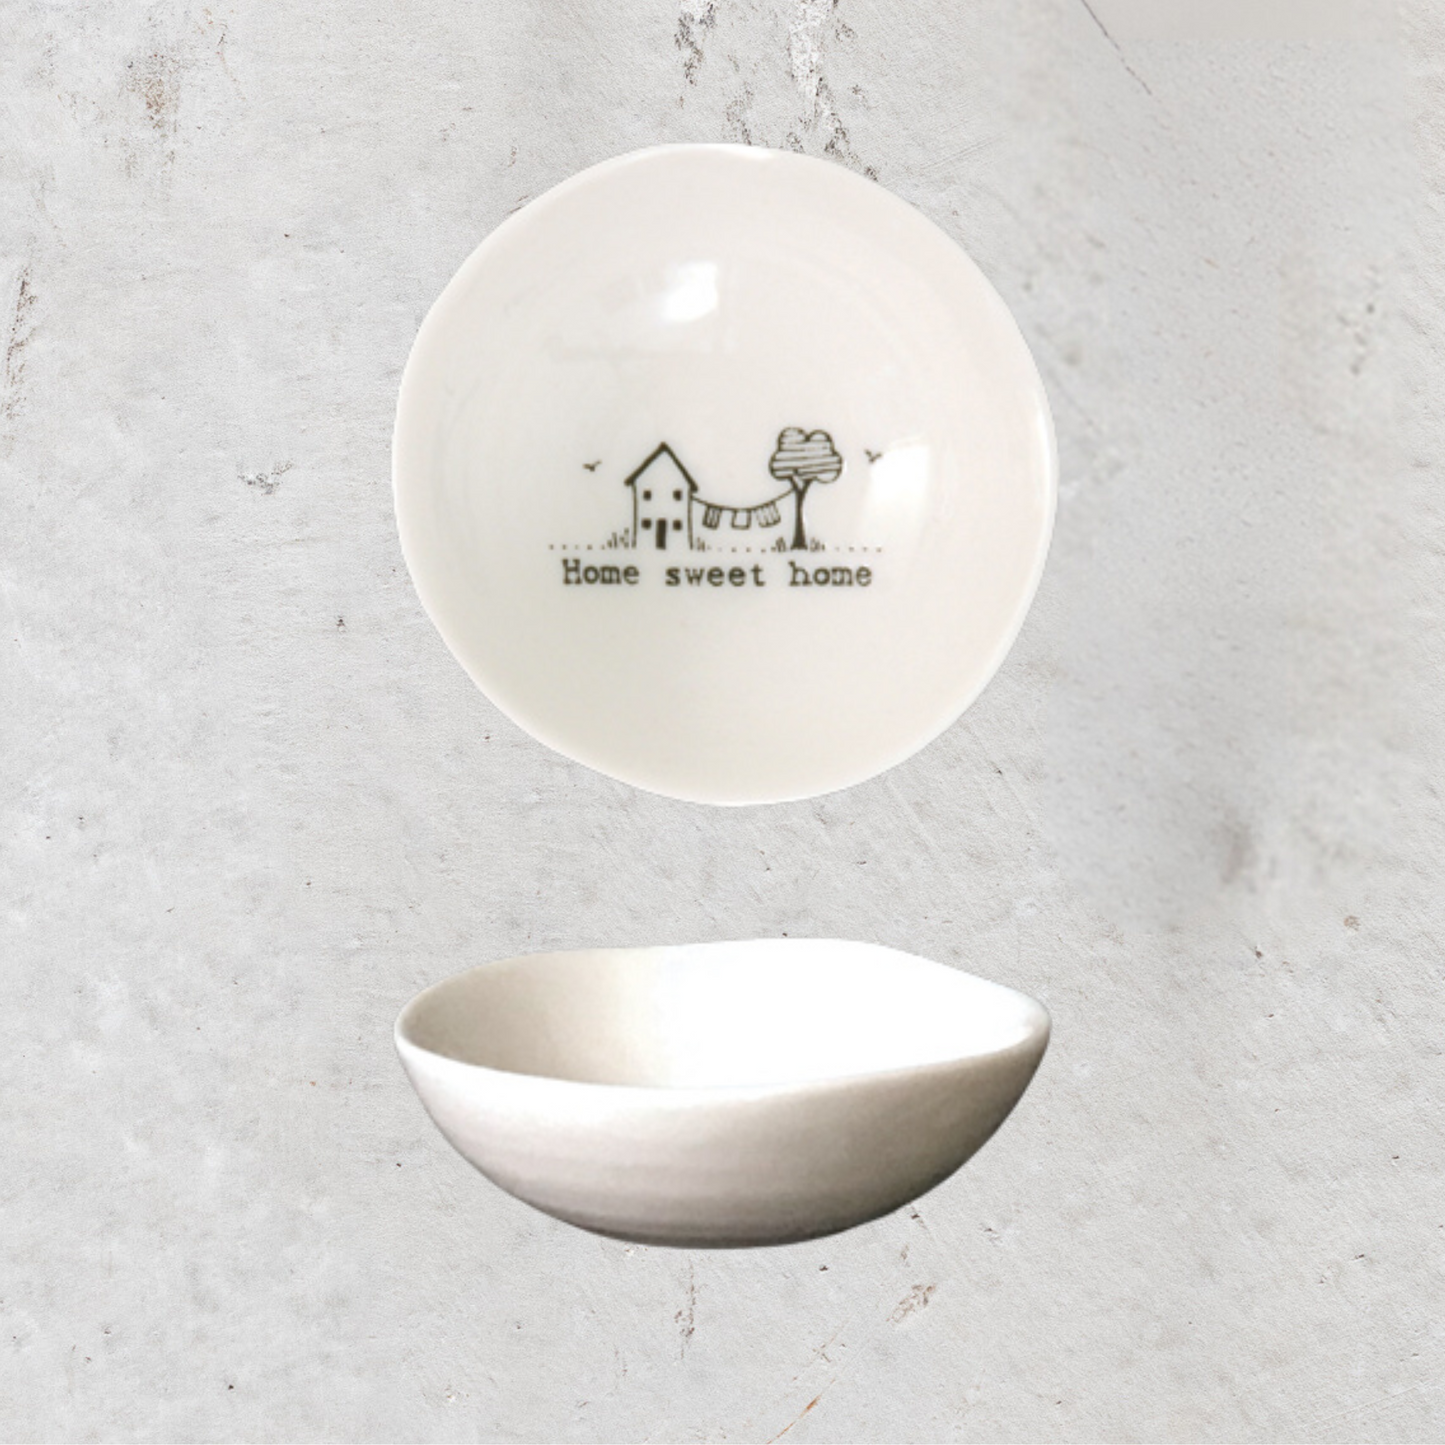 Wobbly porcelain bowls - small